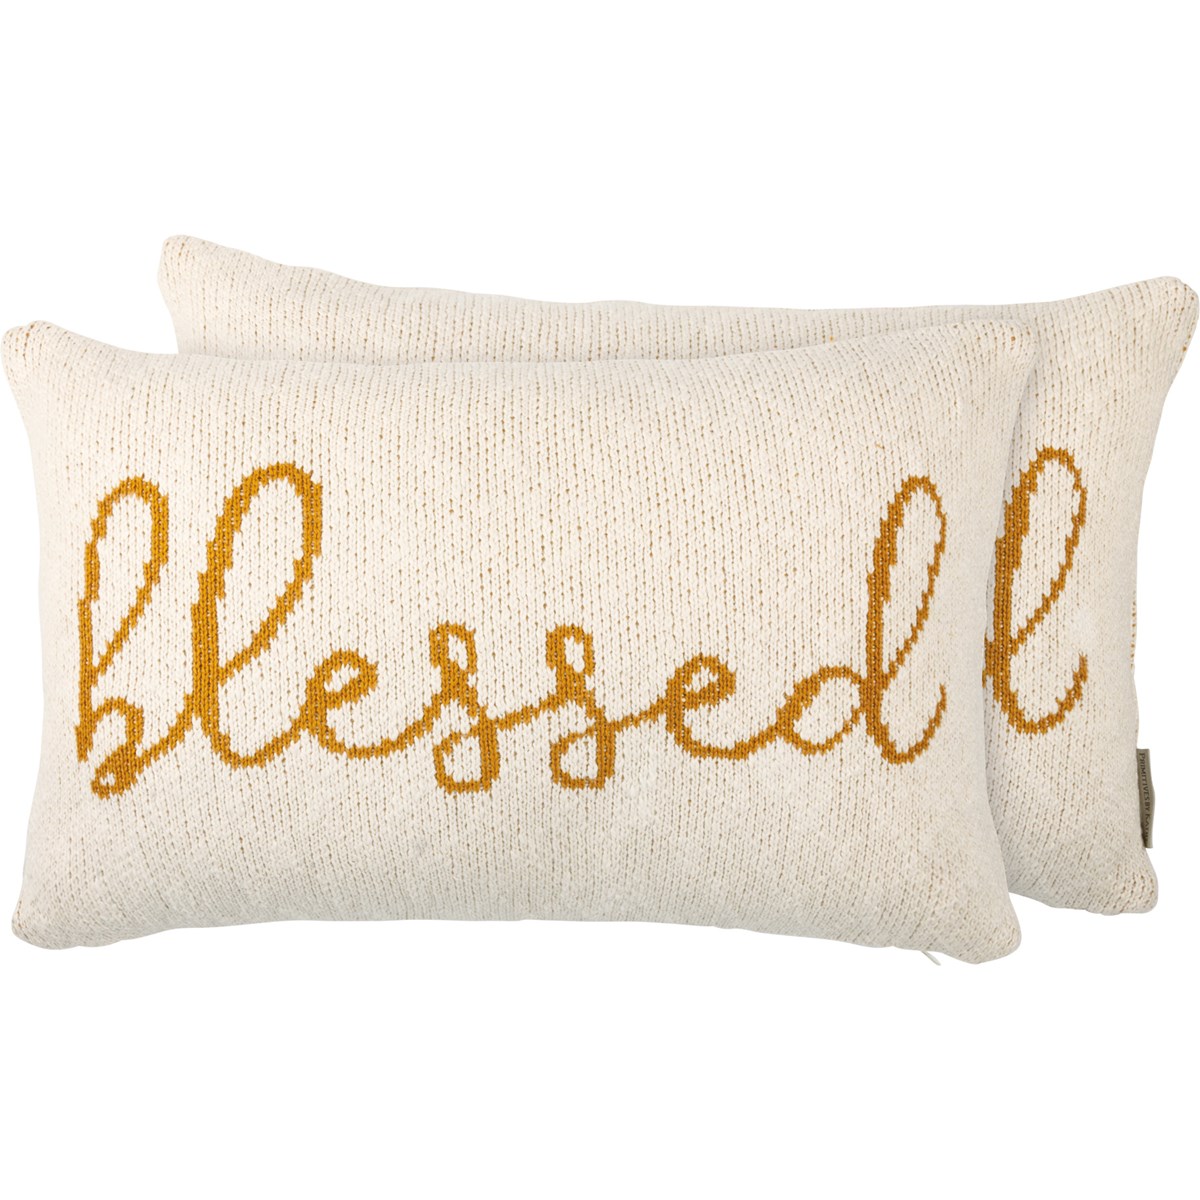 Blessed Pillow - Cotton, Zipper